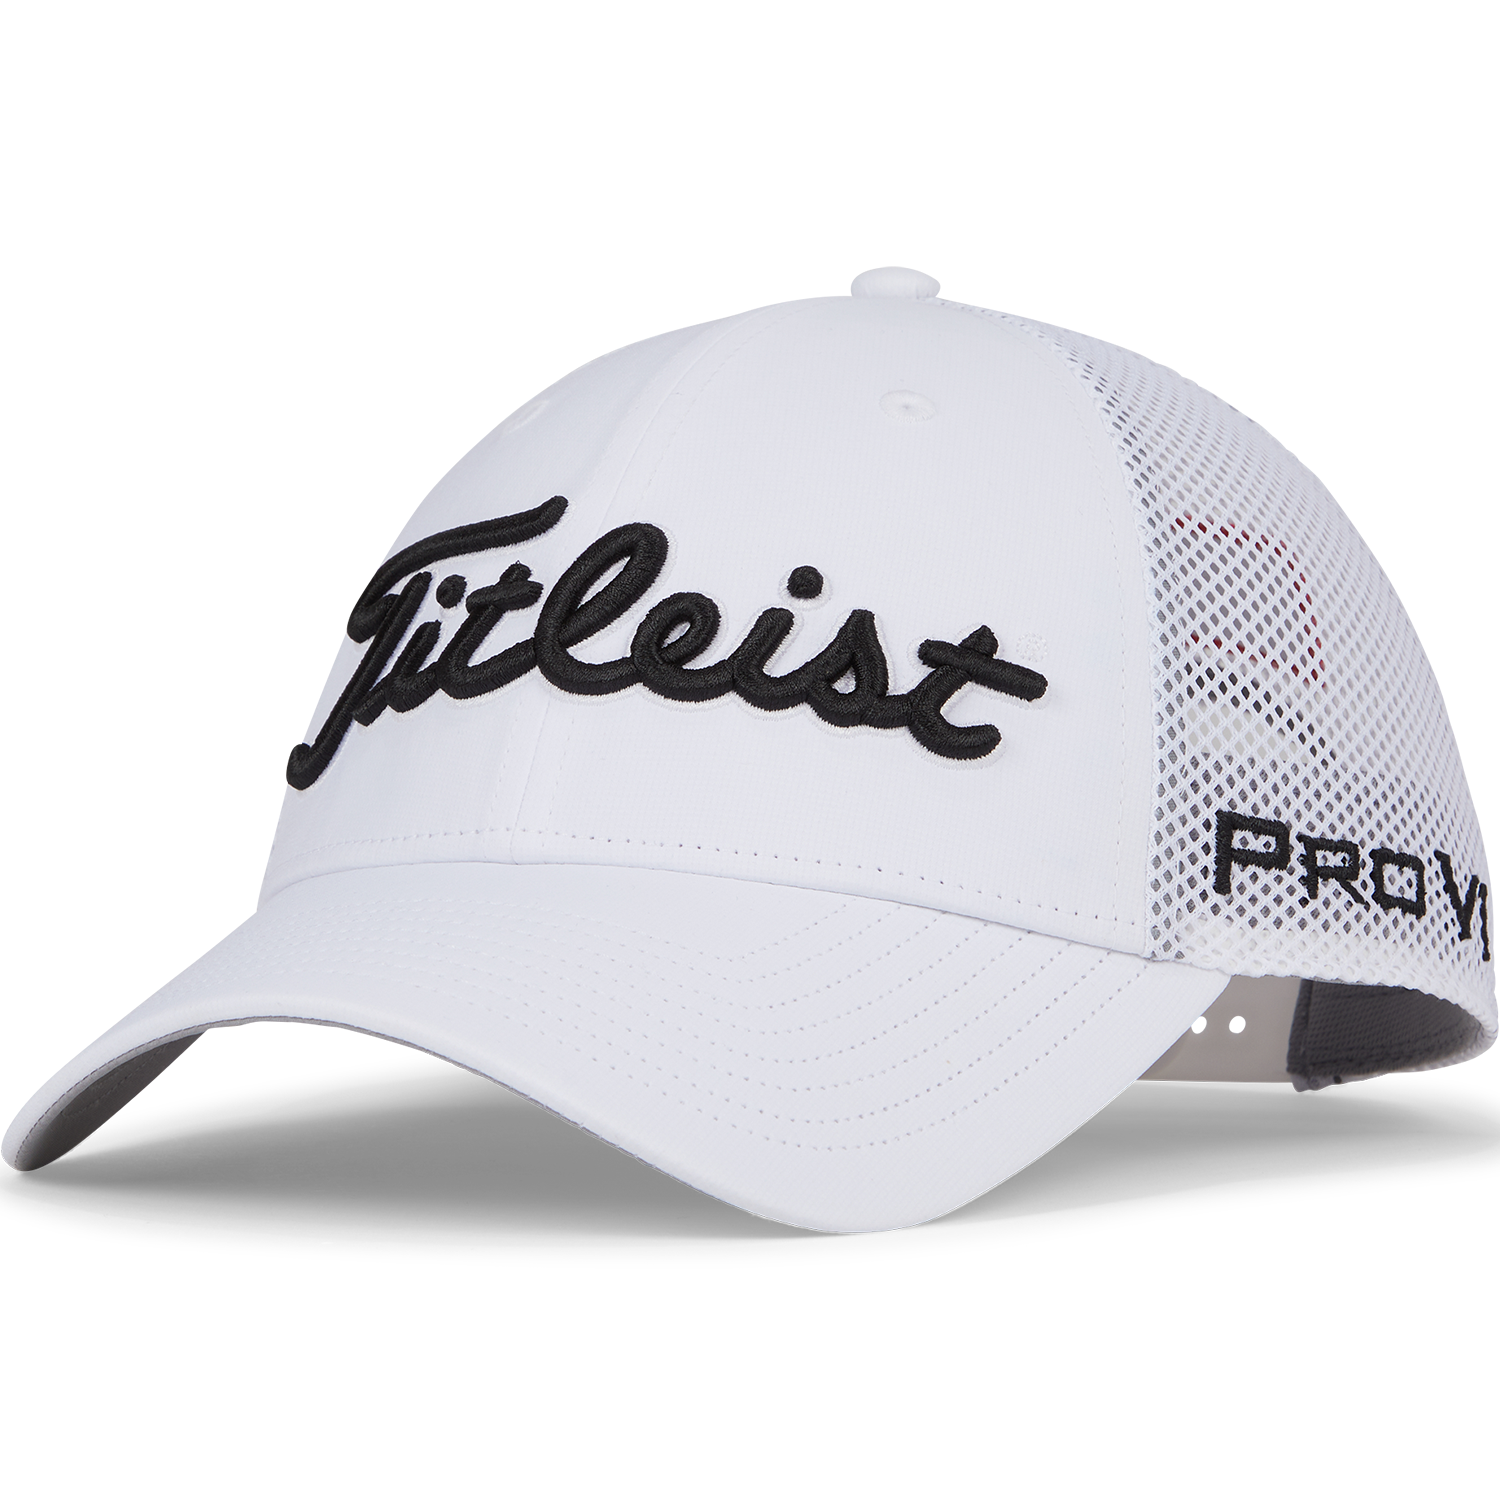 Titleist Tour Performance Mesh Adjustable Golf Cap